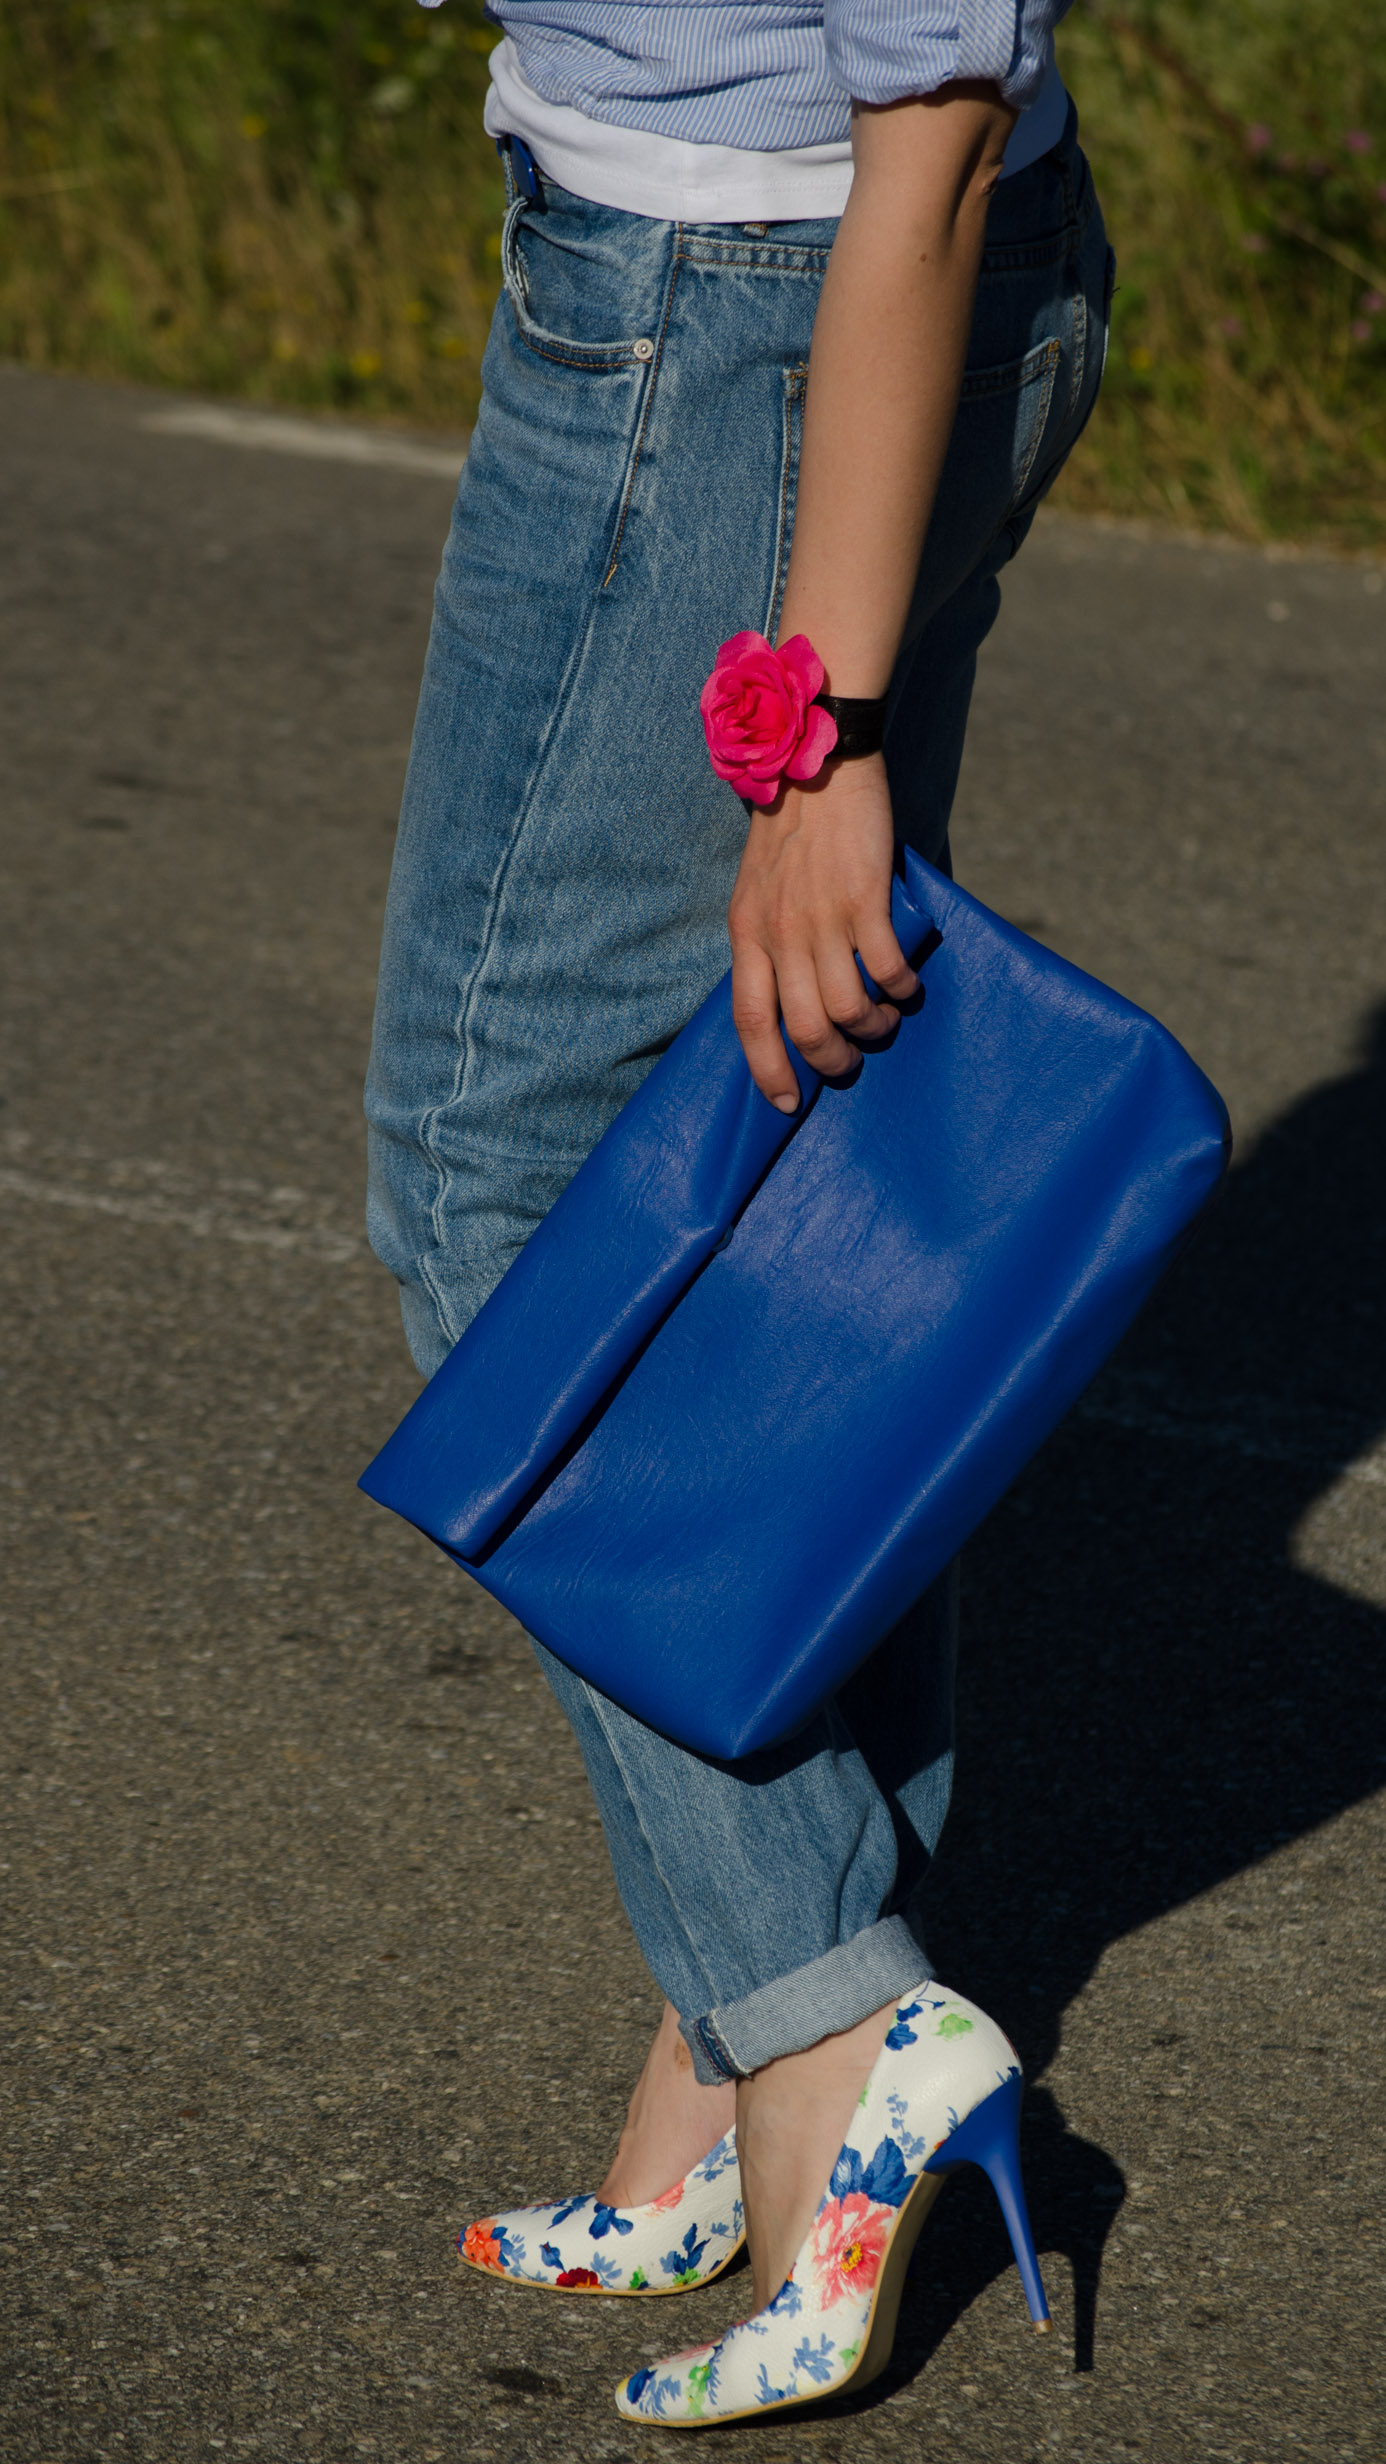 boyfriend jeans blue shirt heels with flowers blue clutch statement jewlery